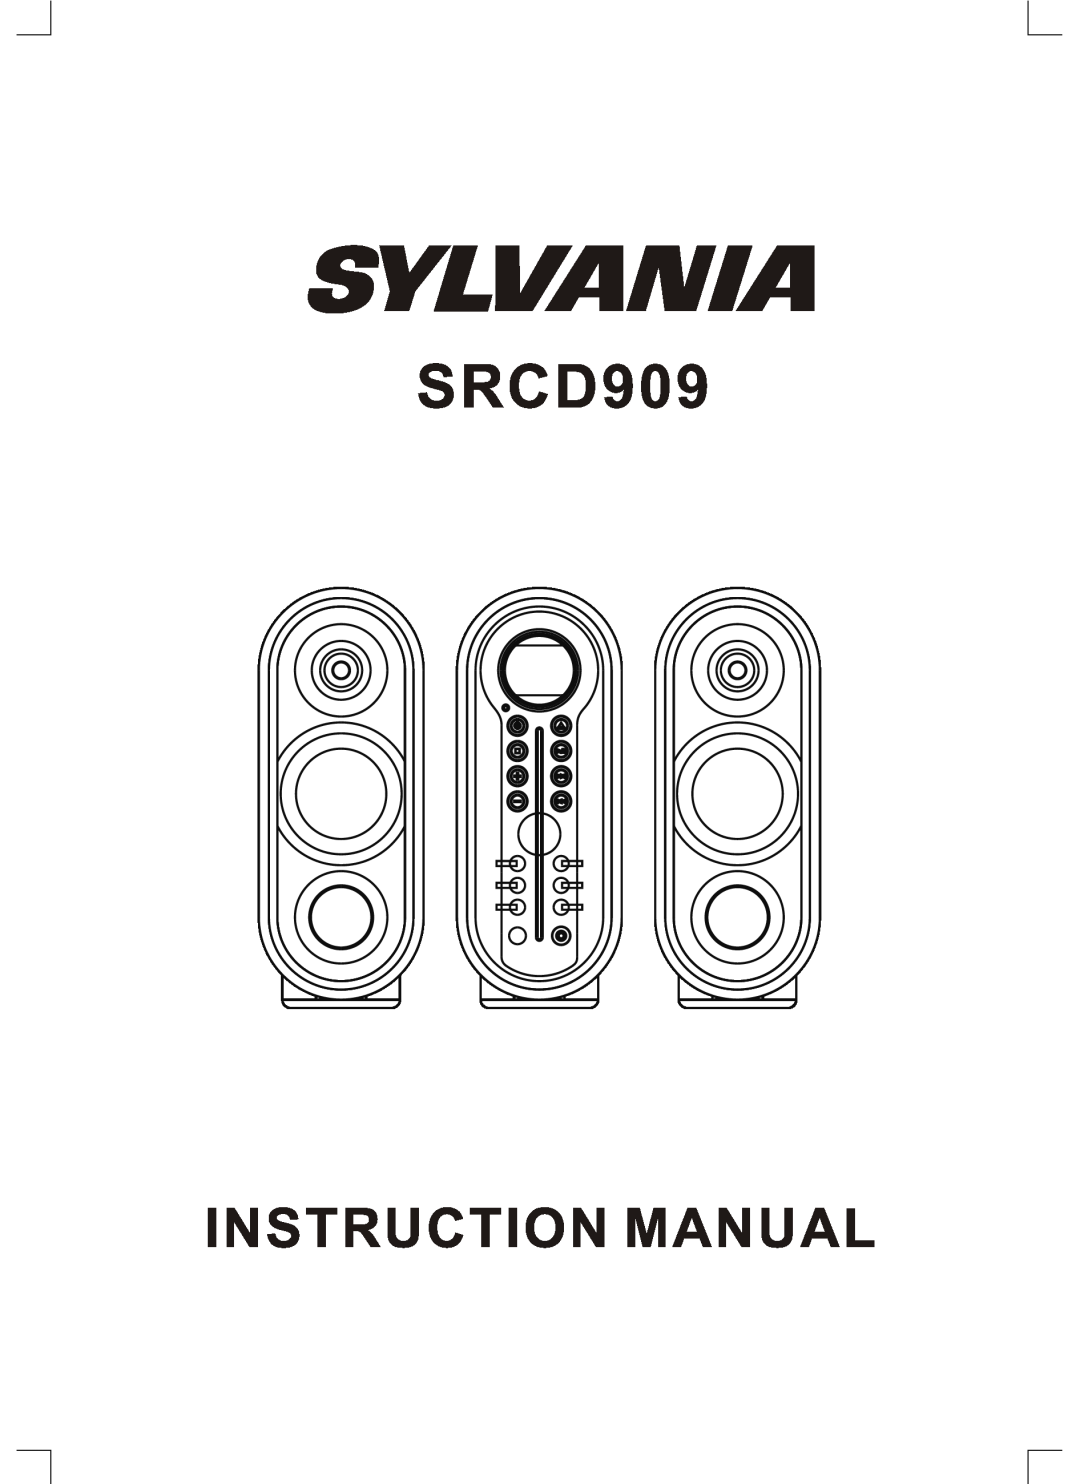 Sylvania SRCD909 instruction manual 